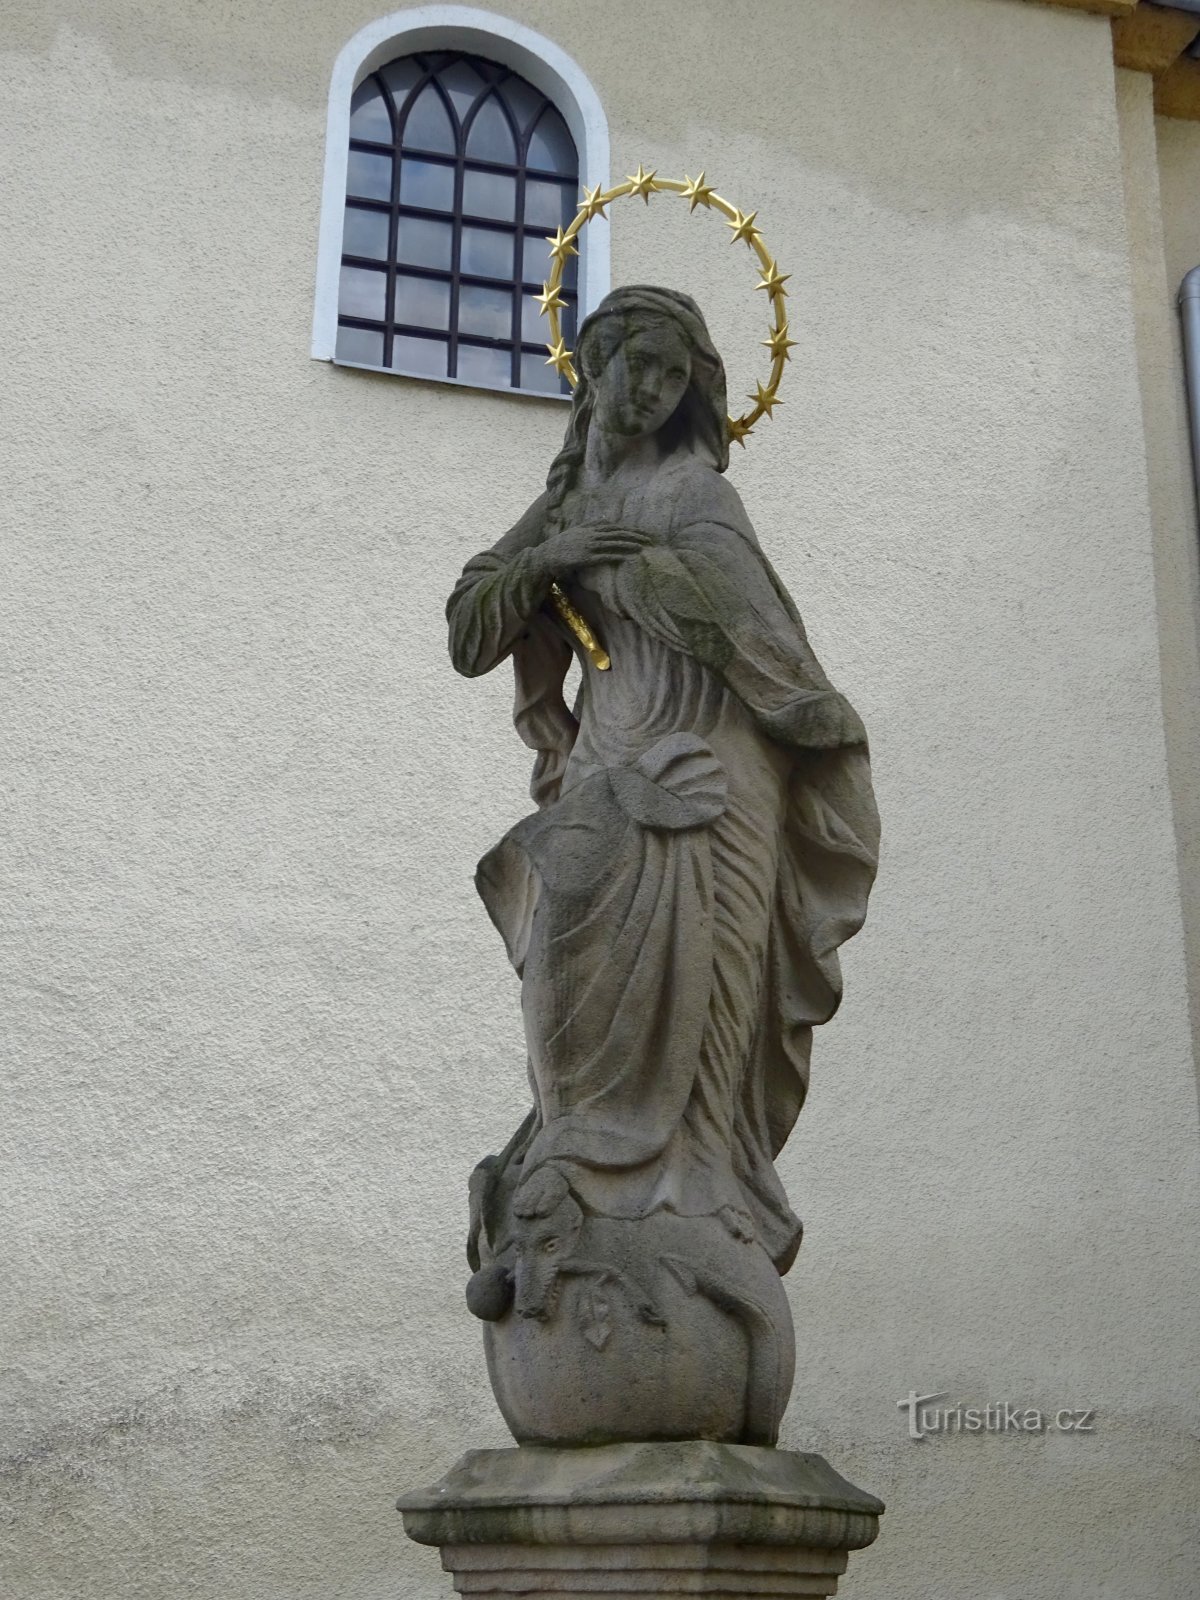 Klimkovice - 圣母玛利亚雕像